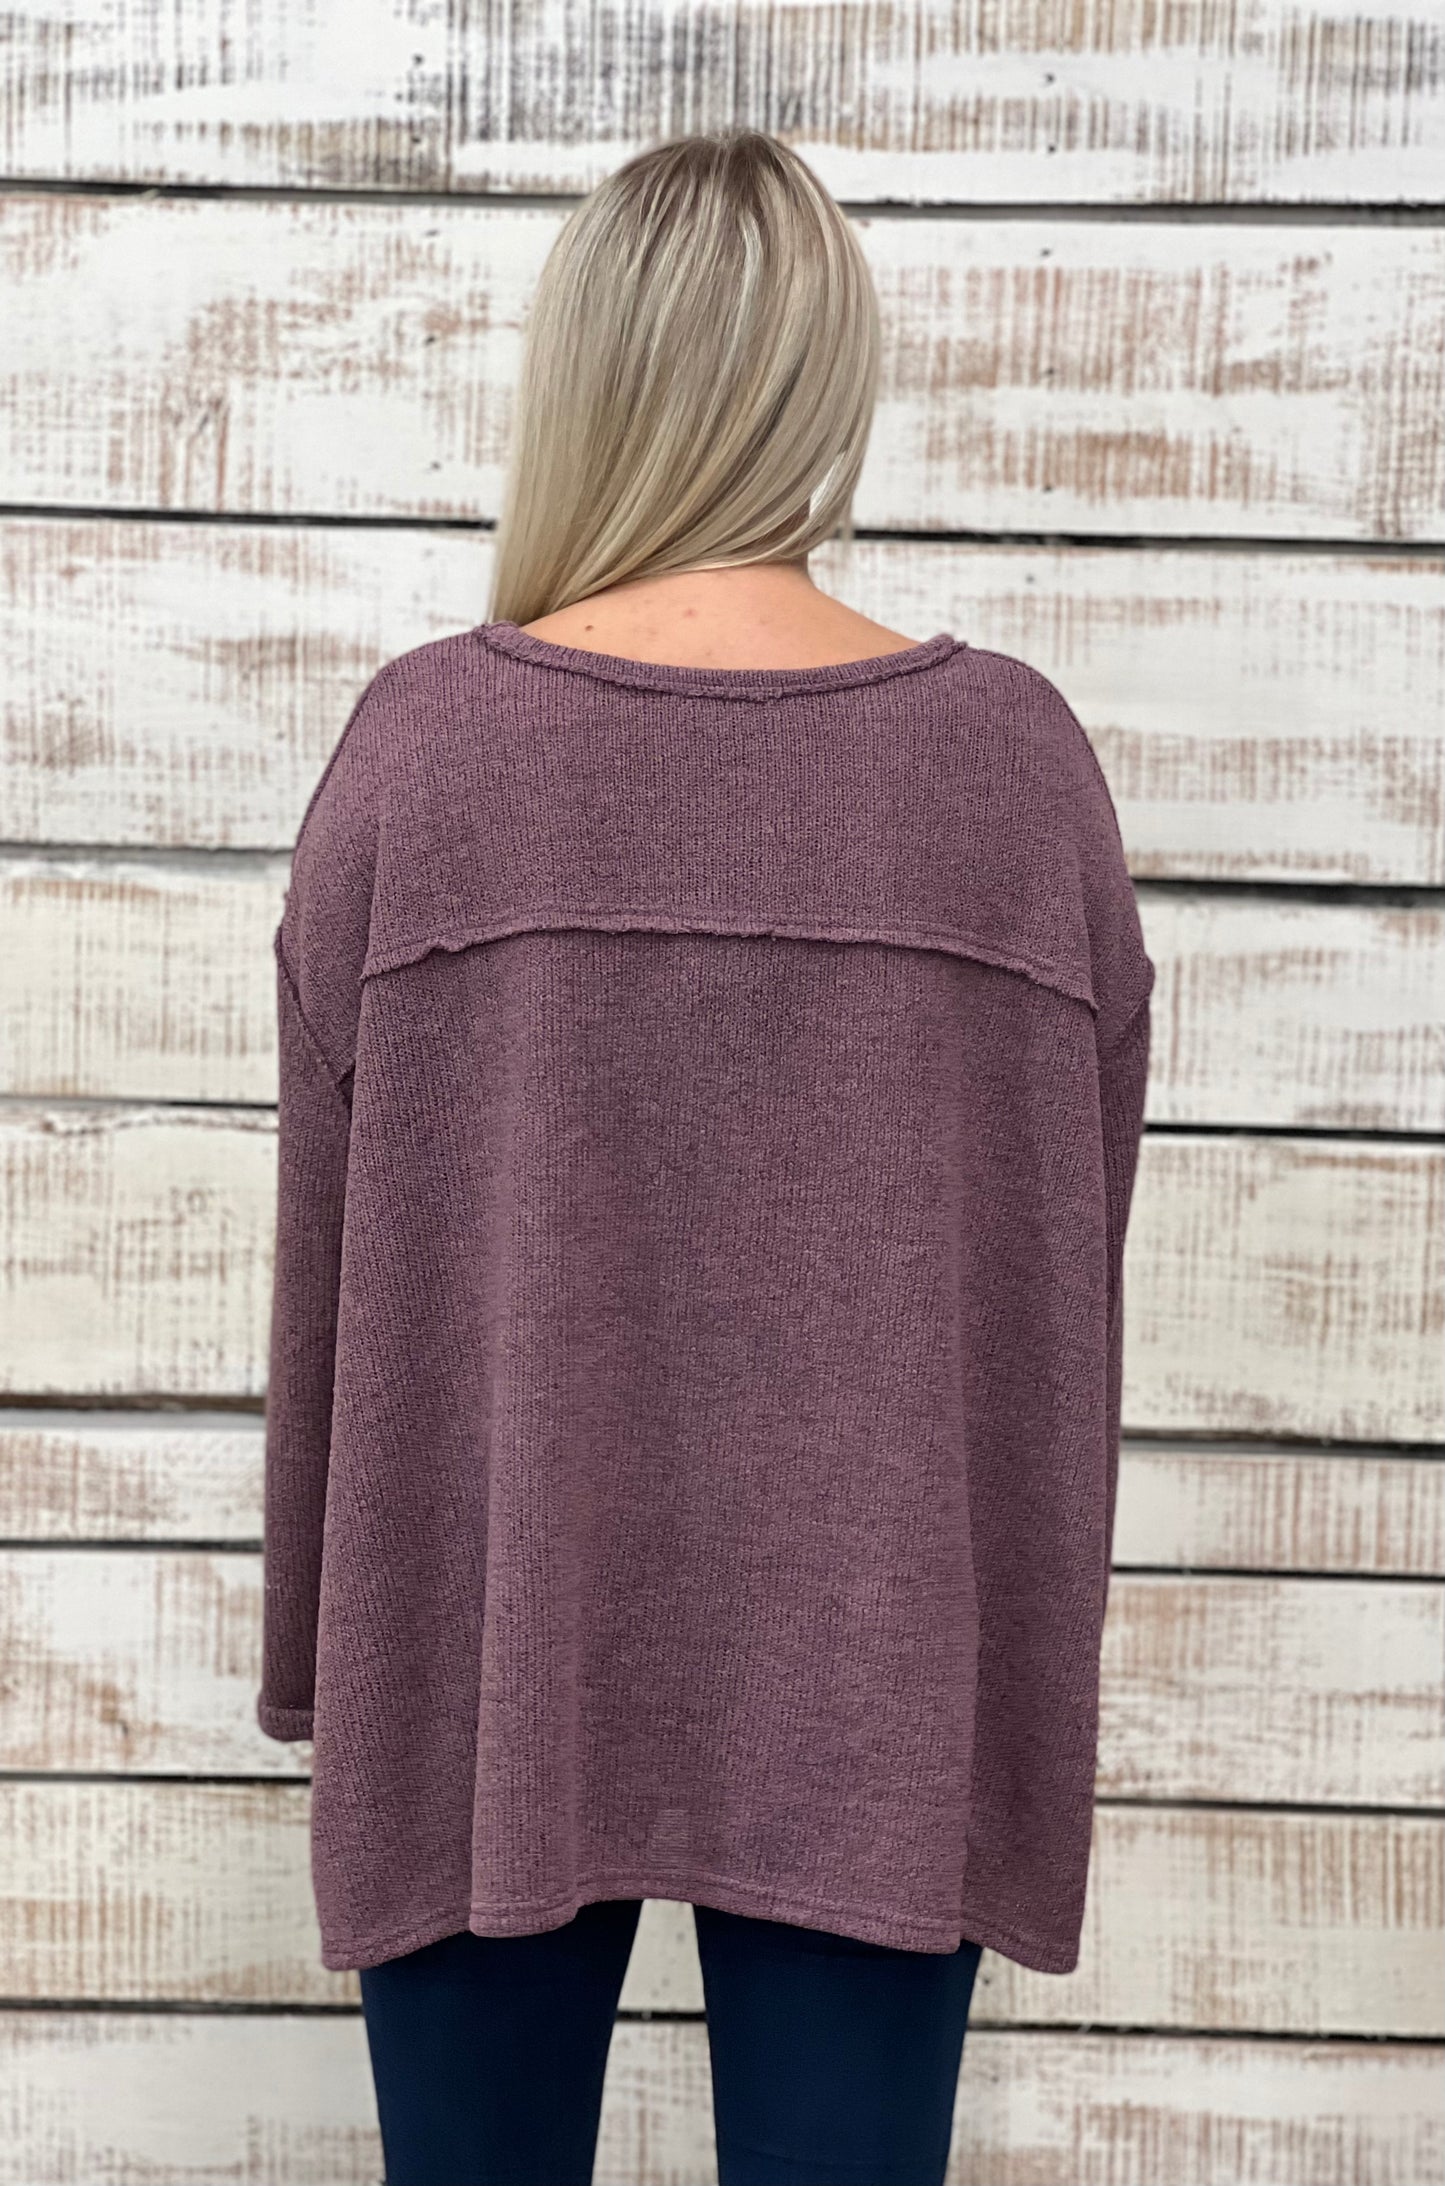 Taro-purple knit sweater with raw edge detail